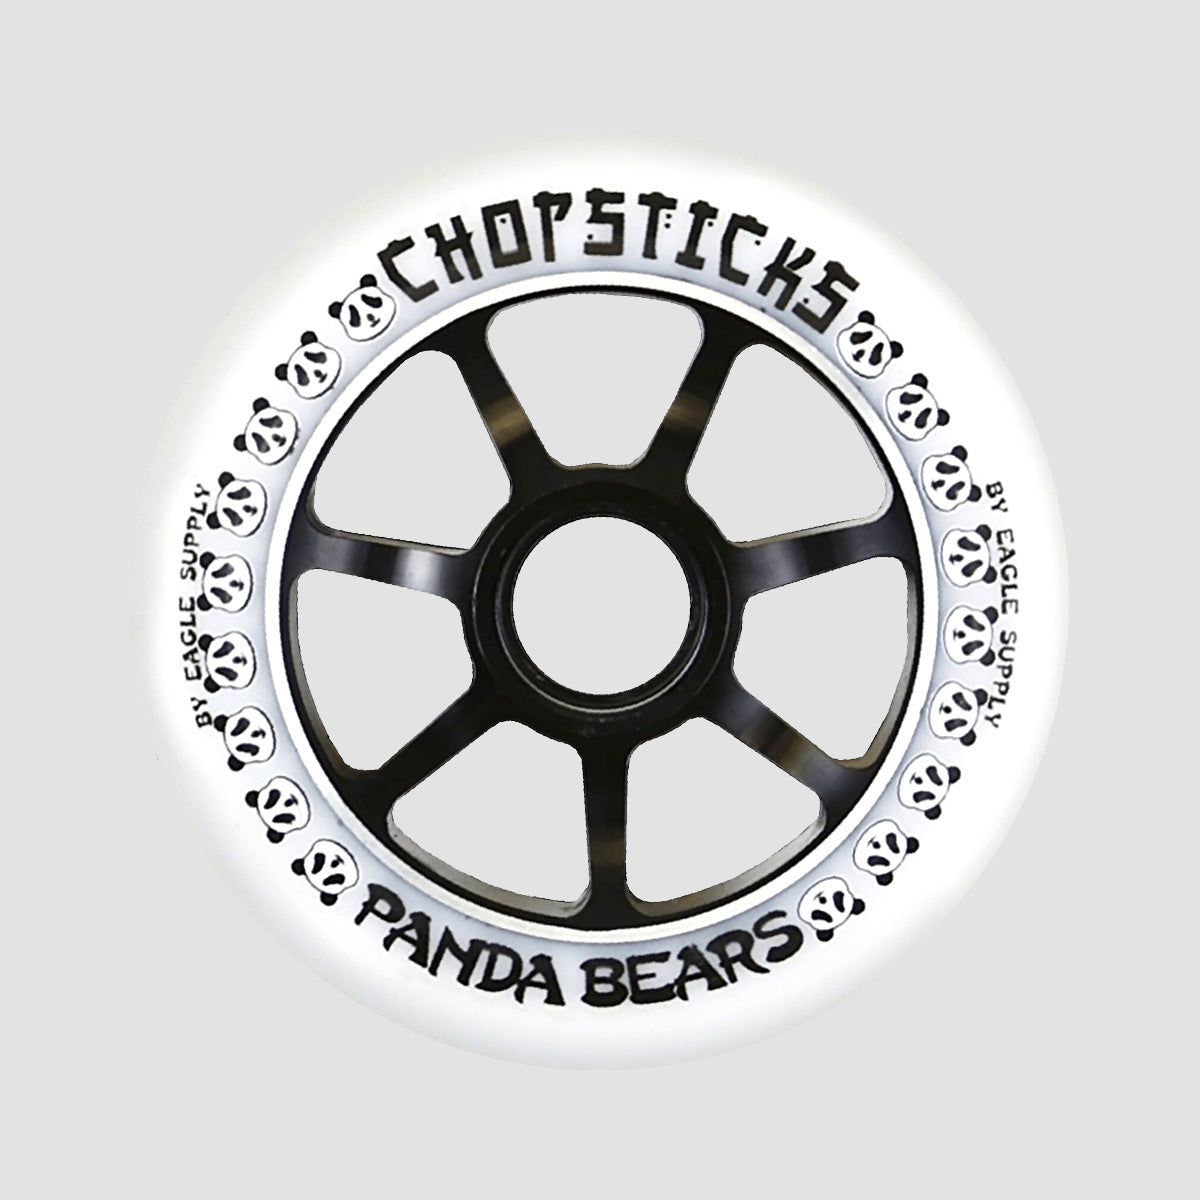 Chopsticks Panda Bears Scooter Wheel x1 White 100mm